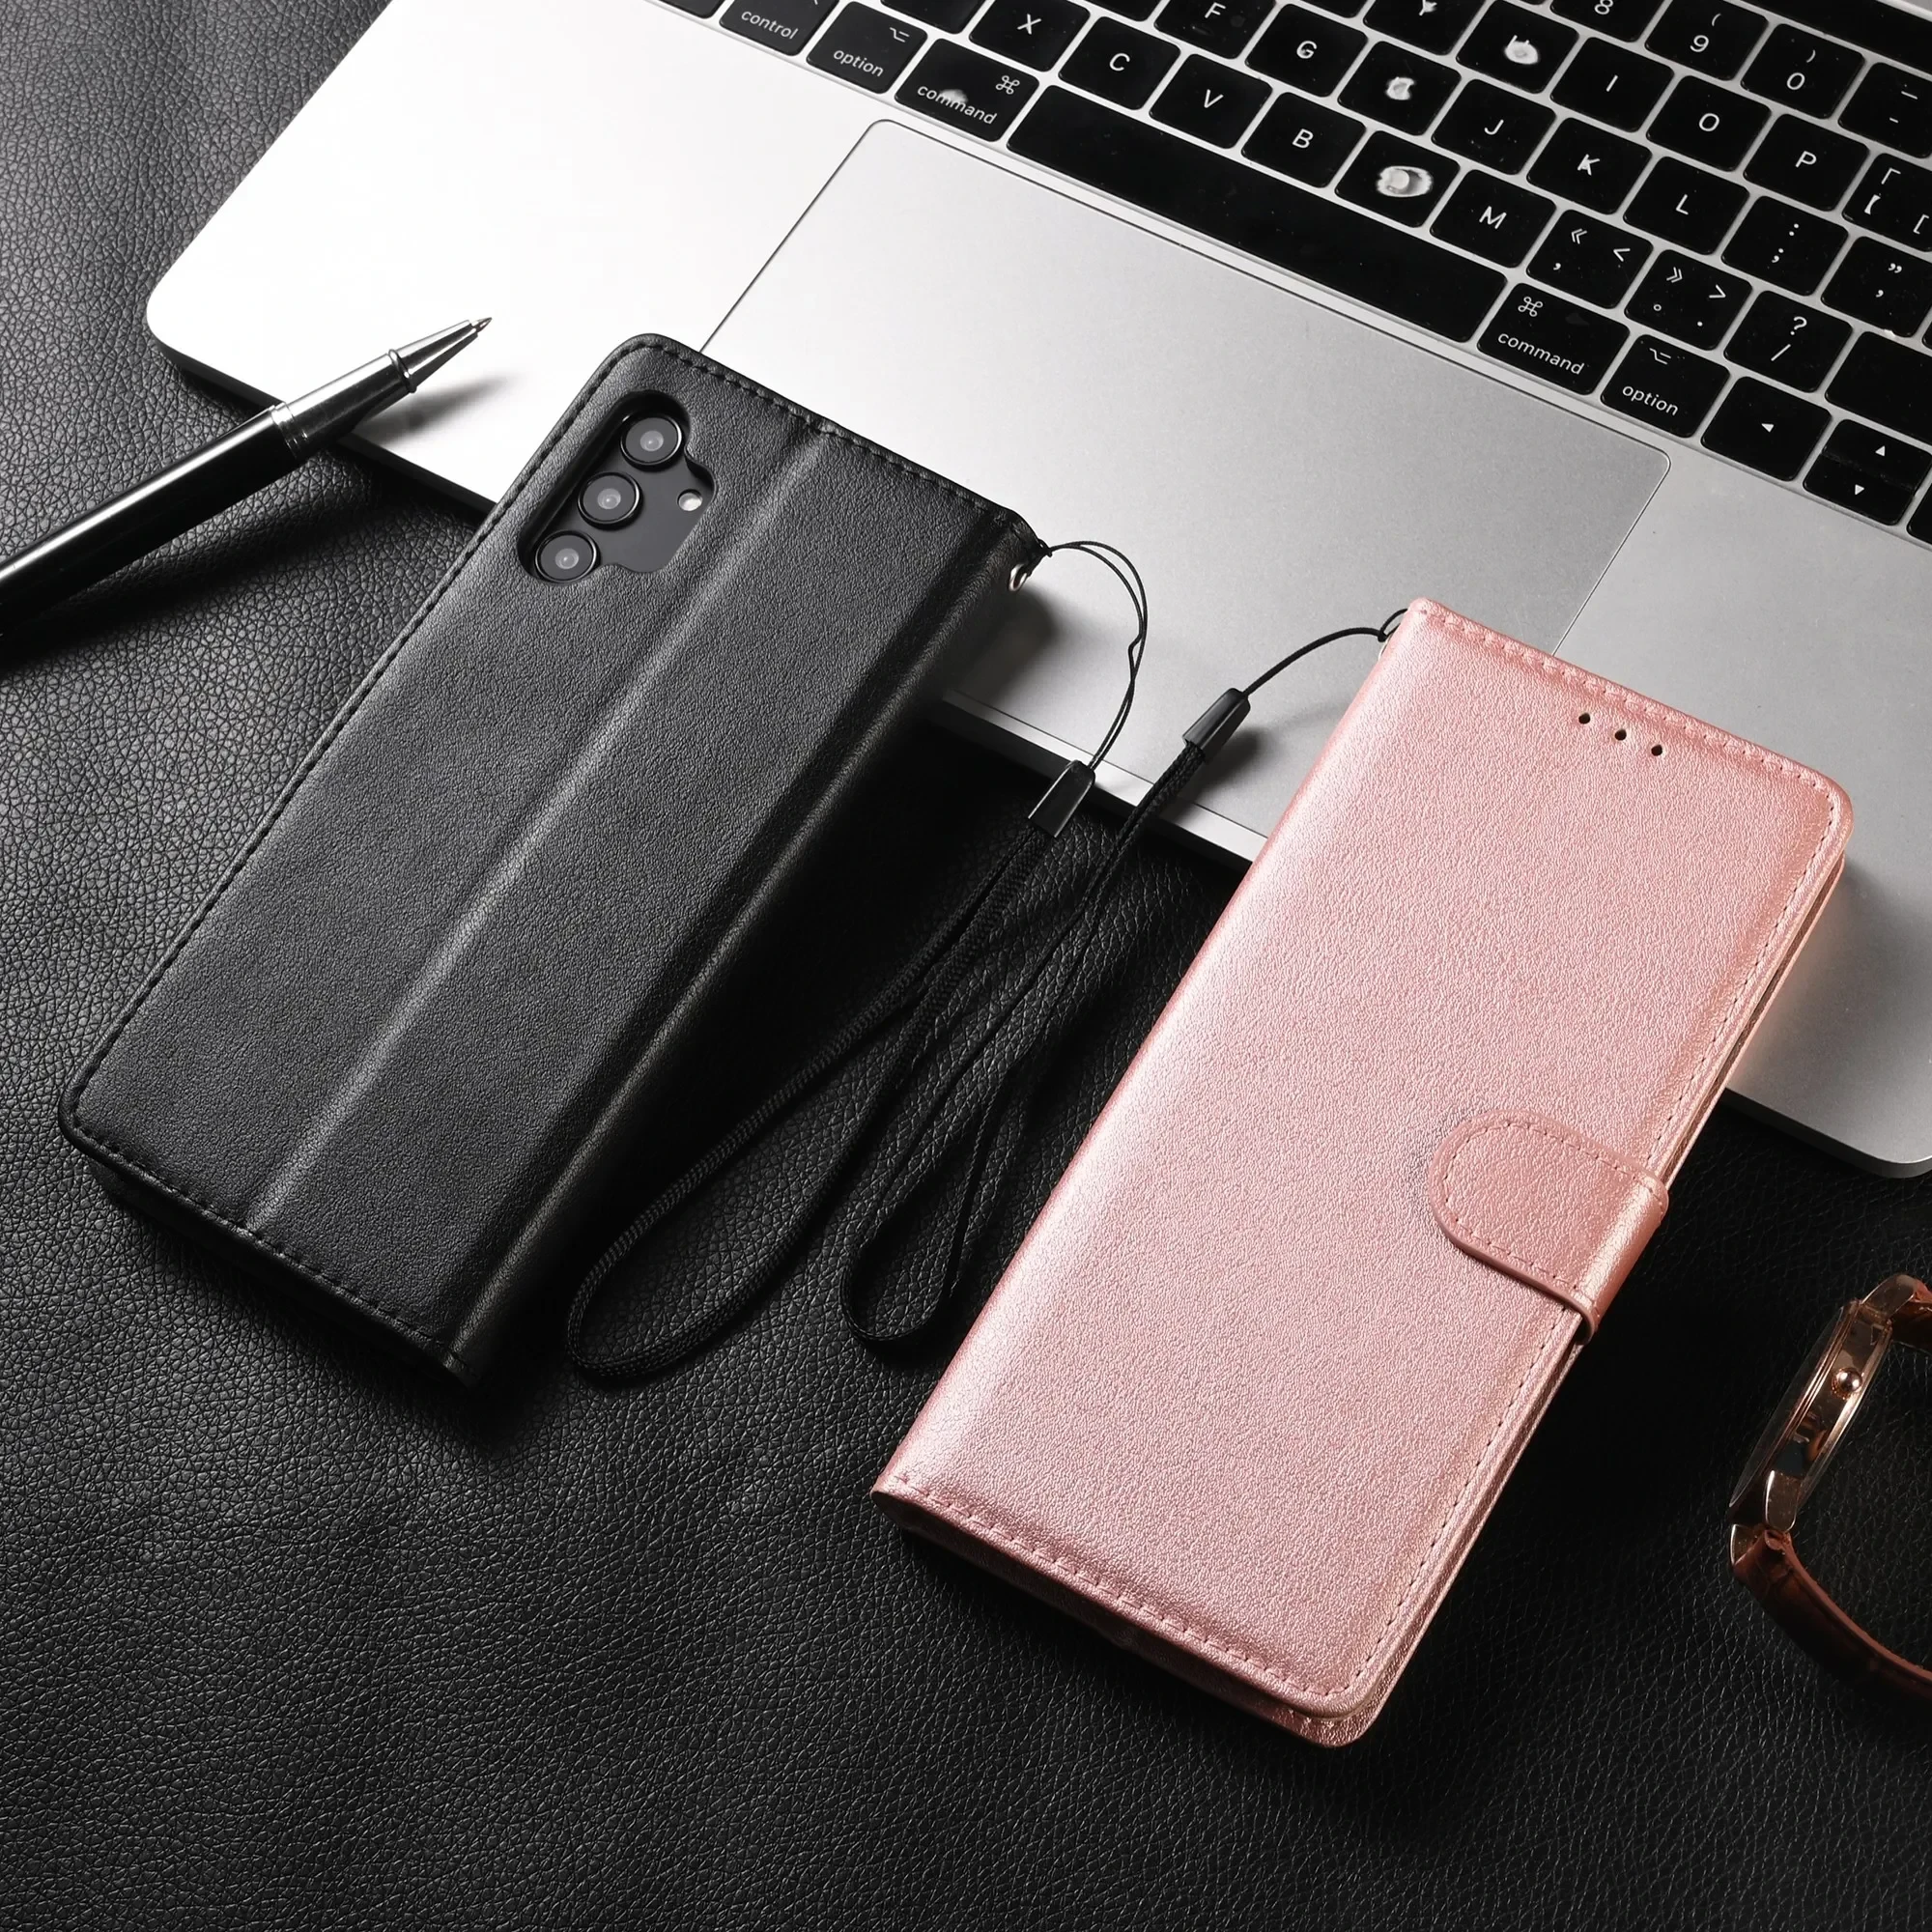 Flip Wallet Case For XiaoMi RedMi Note 10 Pro Max 9 8 7 6 5 4 Pro 9 9A 9C 8 8A 7A 6A 5A 4X 5 Plus Leather Case Protect Cover